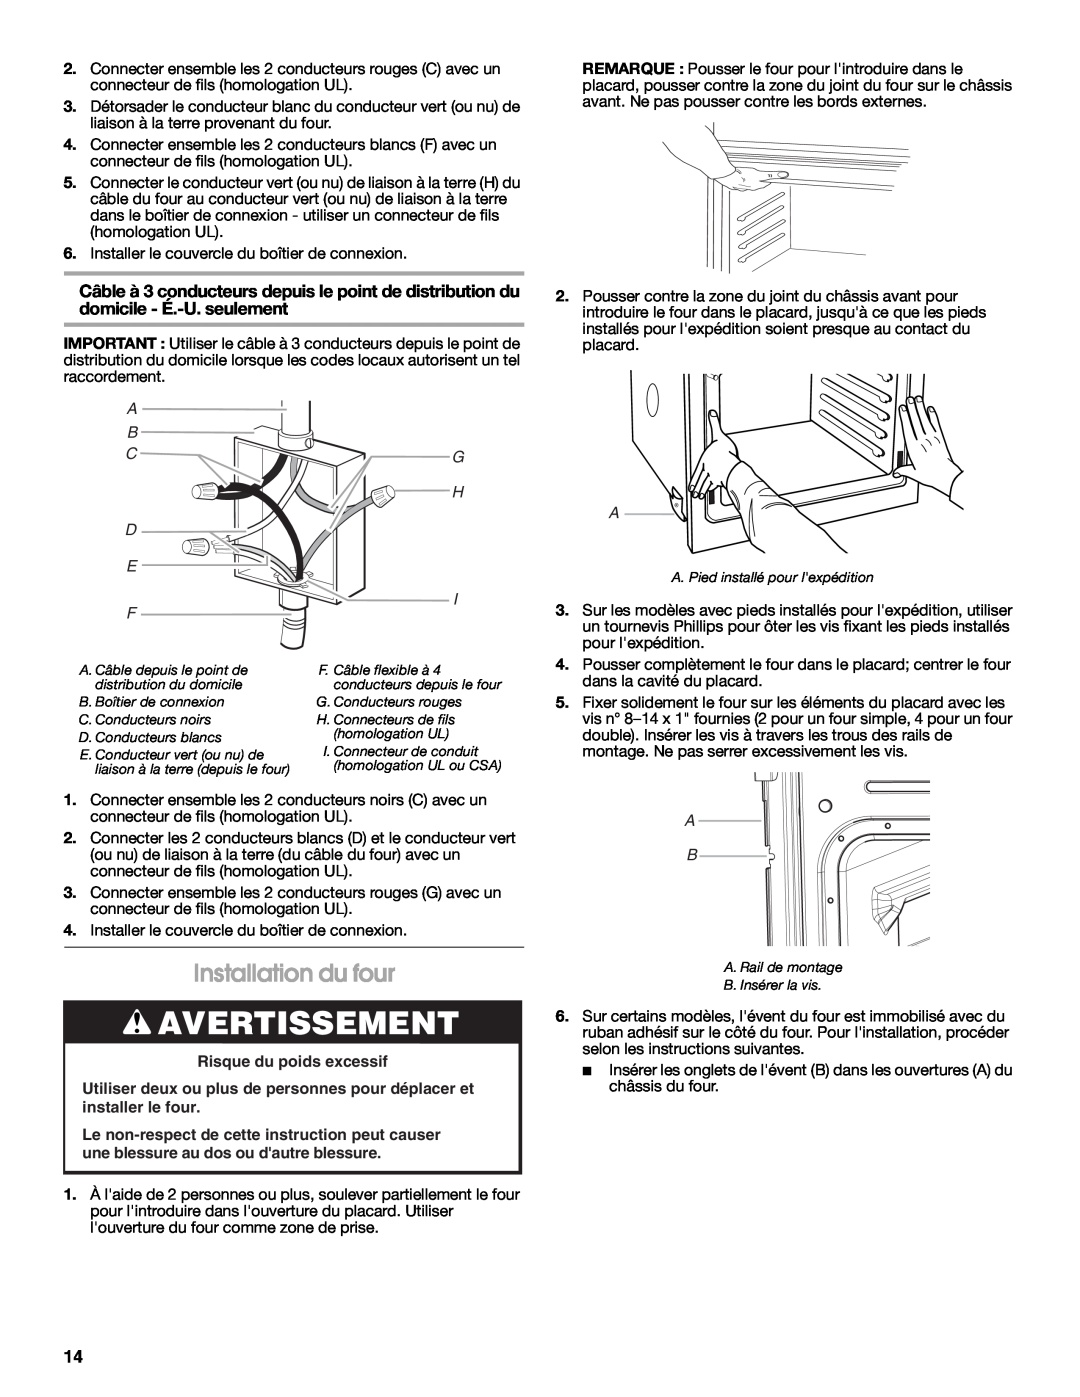 Whirlpool RBS277PV installation instructions Installation du four, Avertissement 